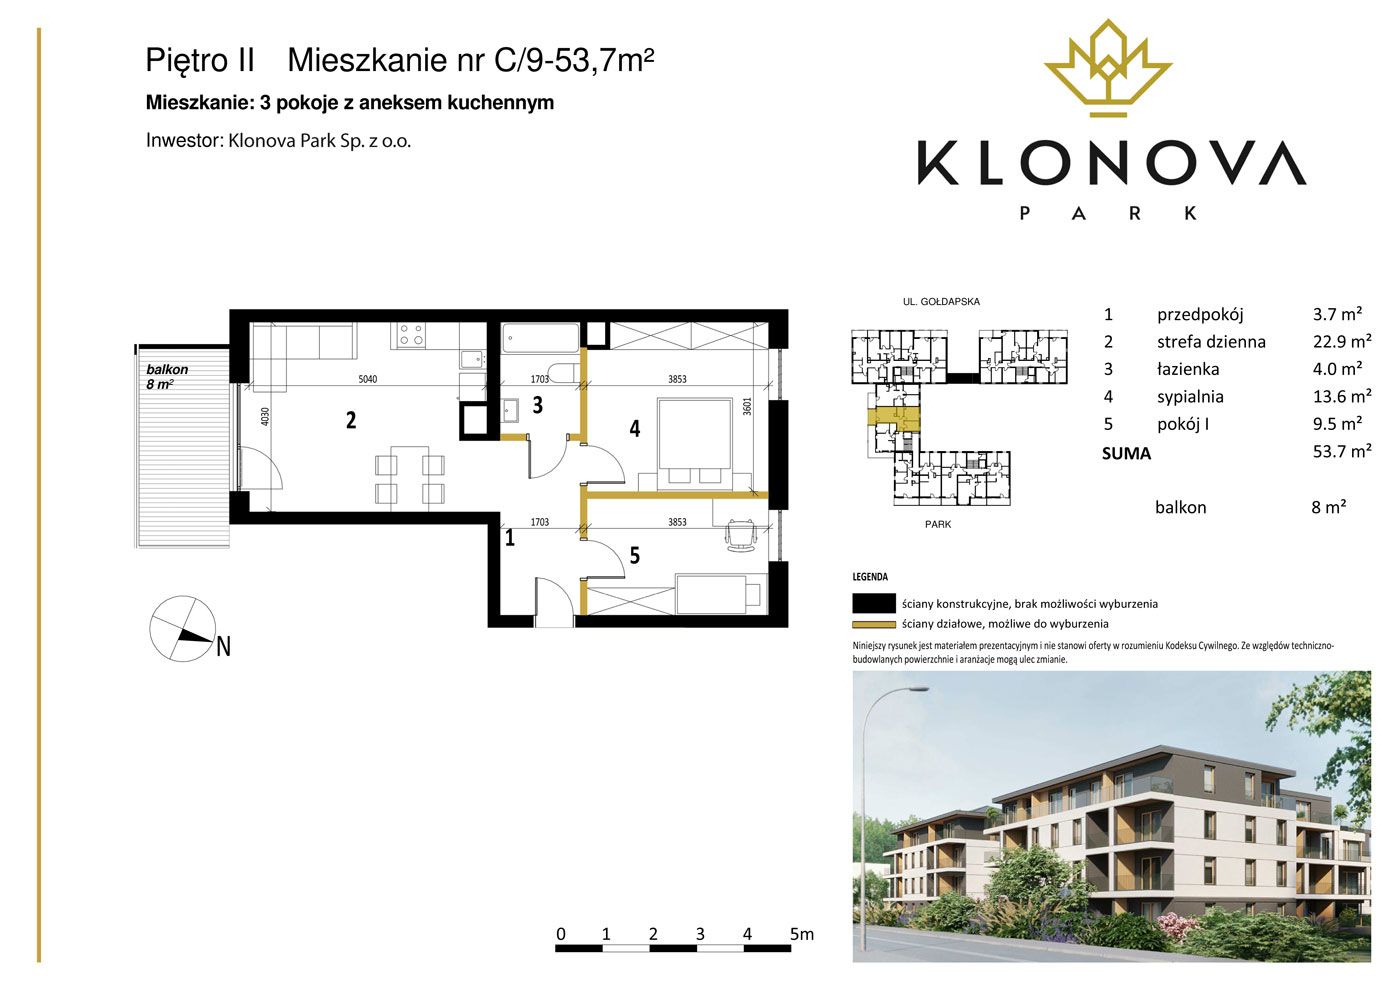 Apartamenty Klonova Park - Plan mieszkania C/9